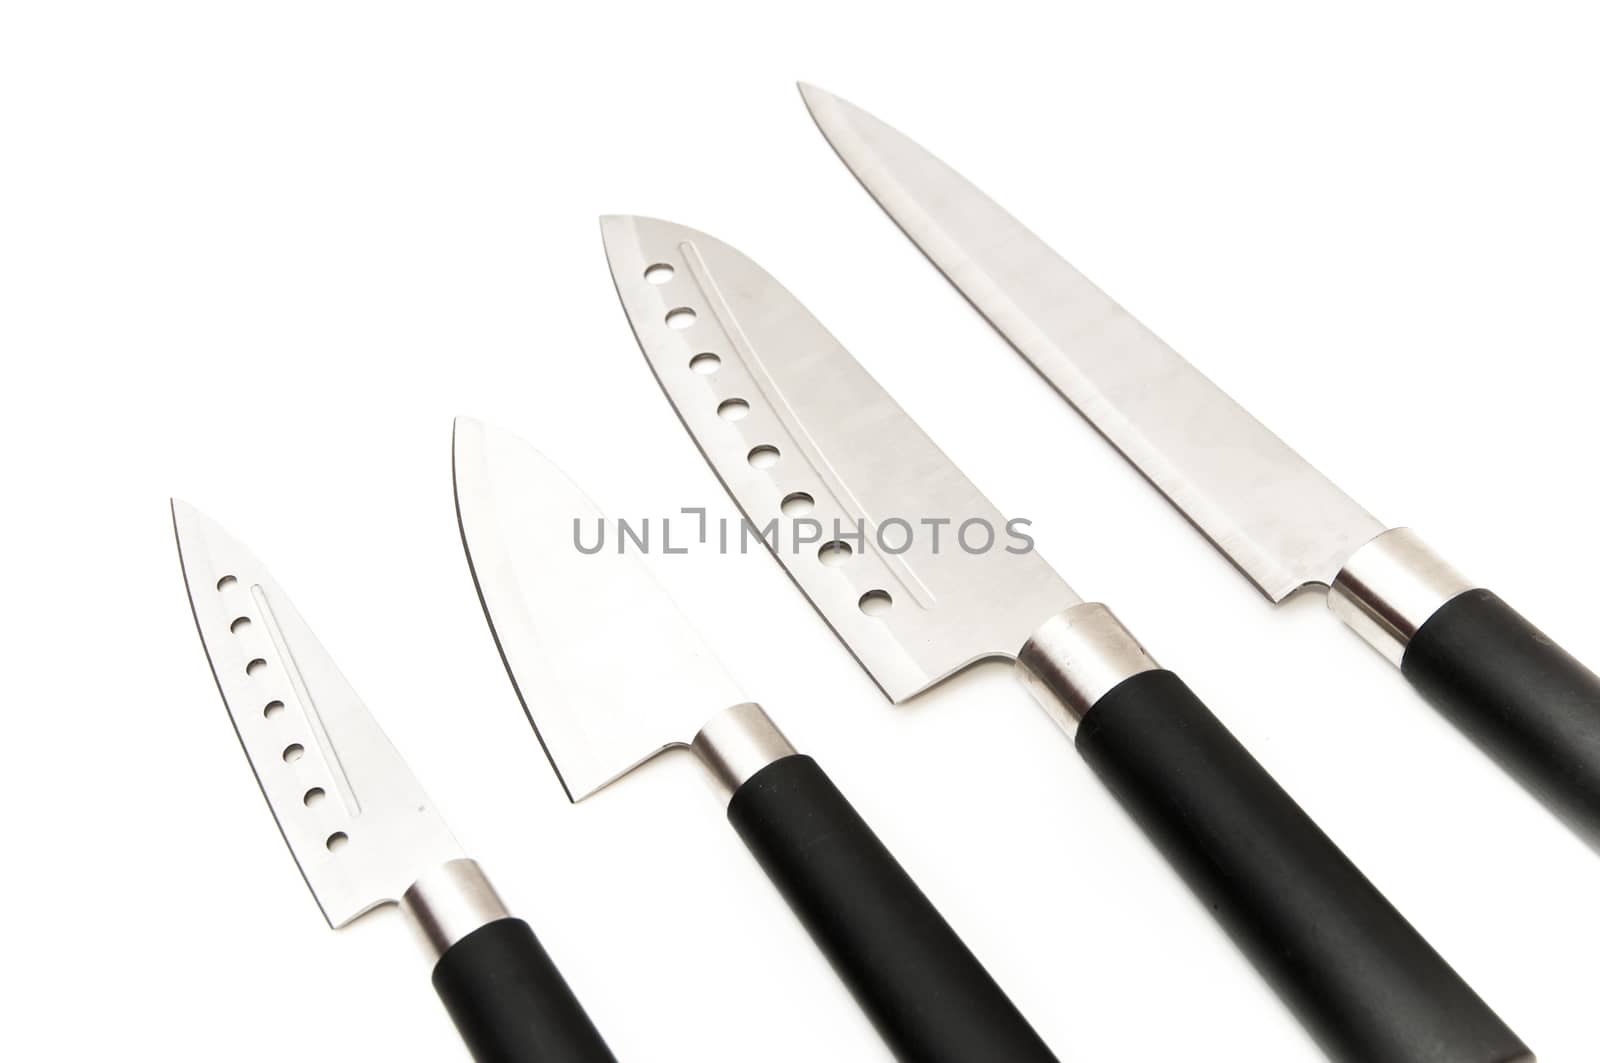 kitchen knives on a white background